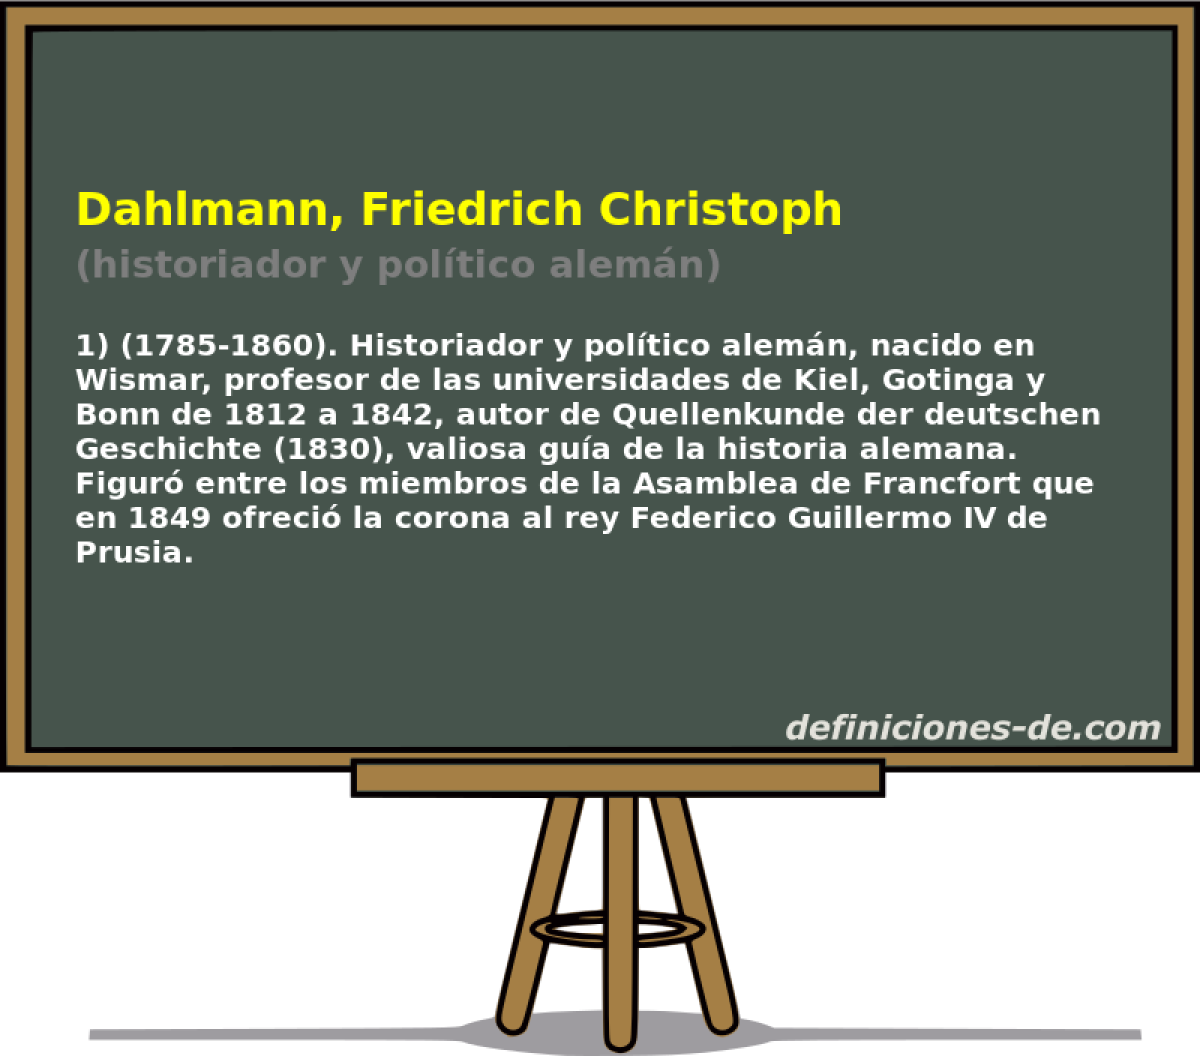 Dahlmann, Friedrich Christoph (historiador y poltico alemn)